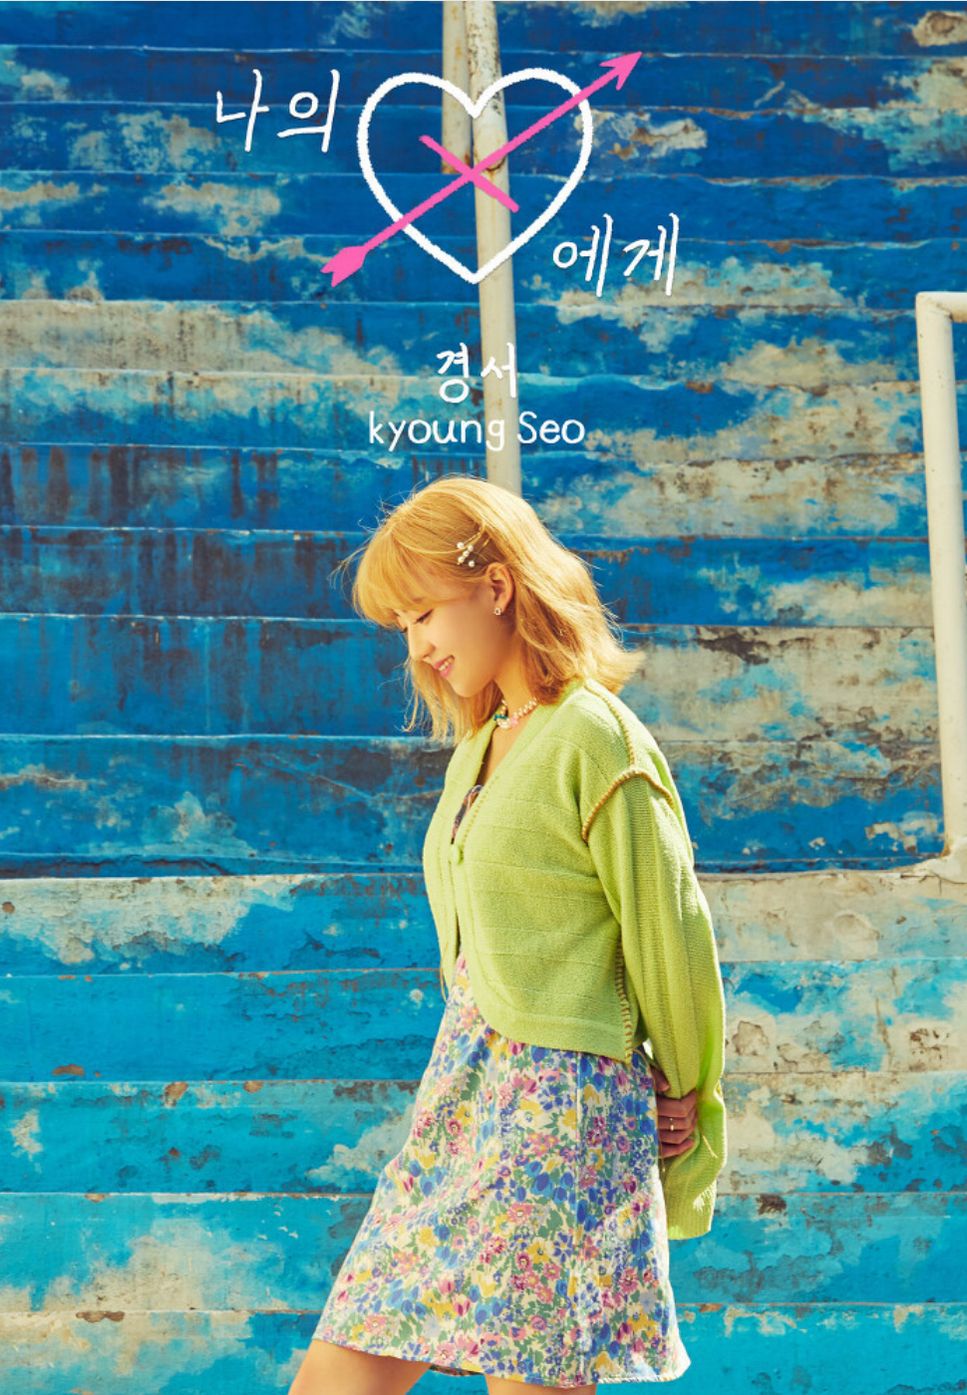 KyoungSeo(경서) - Dear my X(나의 X에게) (Fkey) by PIANOSUMM